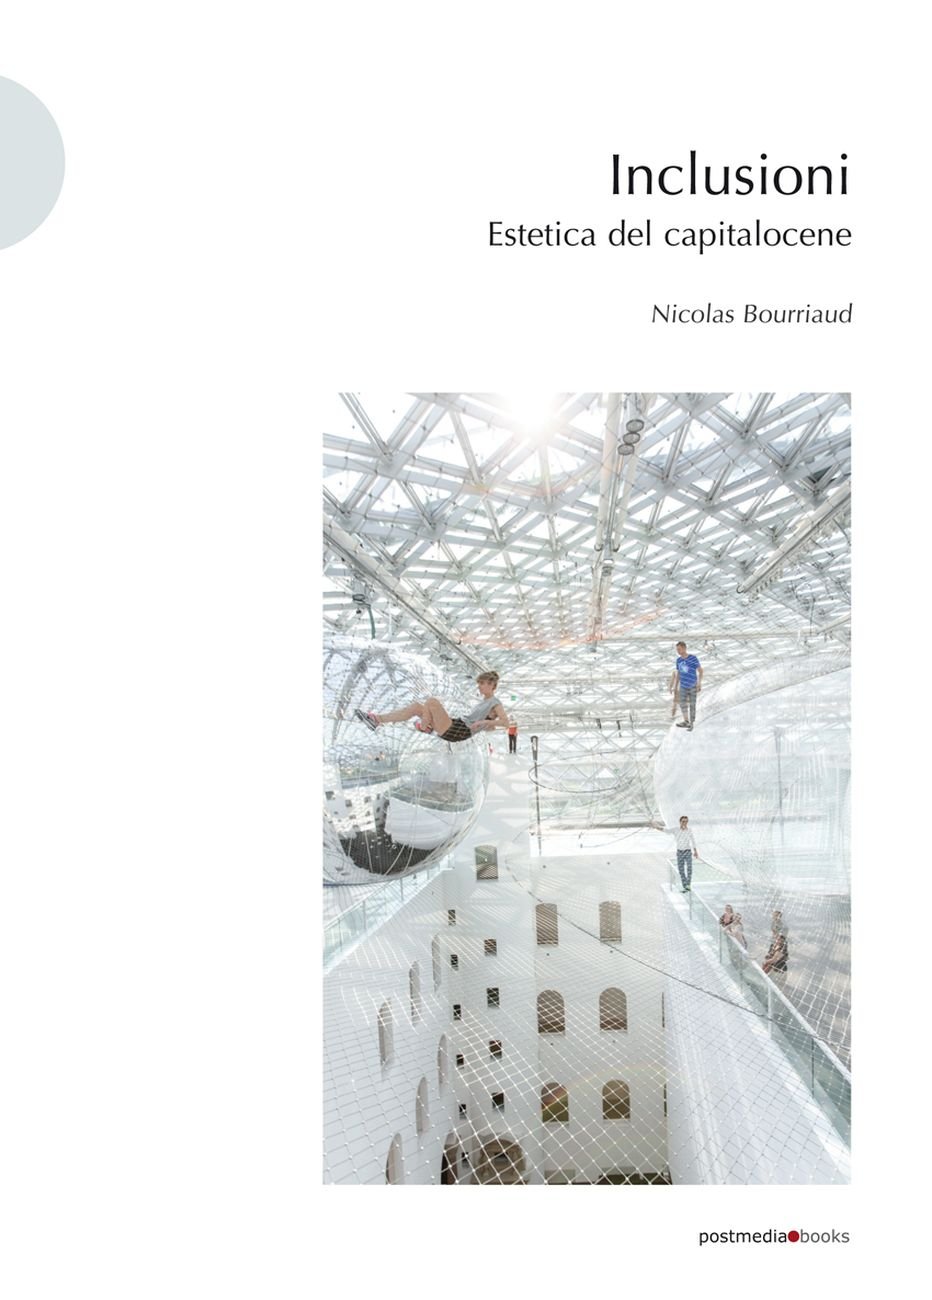 Nicolas Bourriaud – Inclusioni. Estetica del capitalocene (Postmedia Books, Milano 2020)